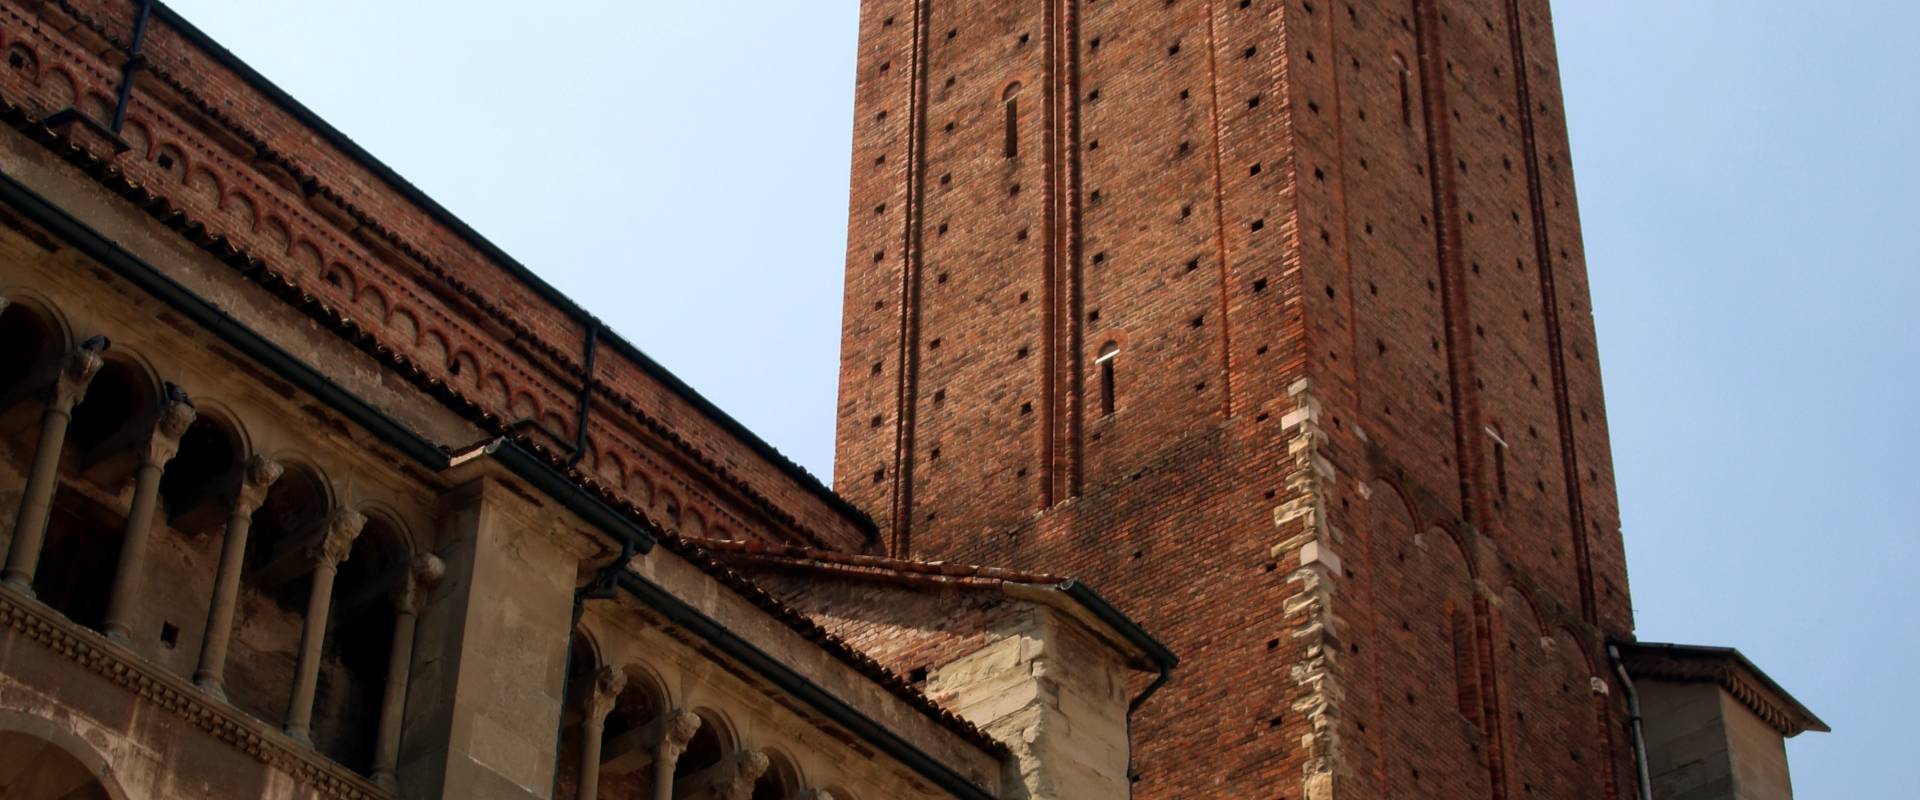 Duomo (Piacenza), campanile 03 photo by Mongolo1984